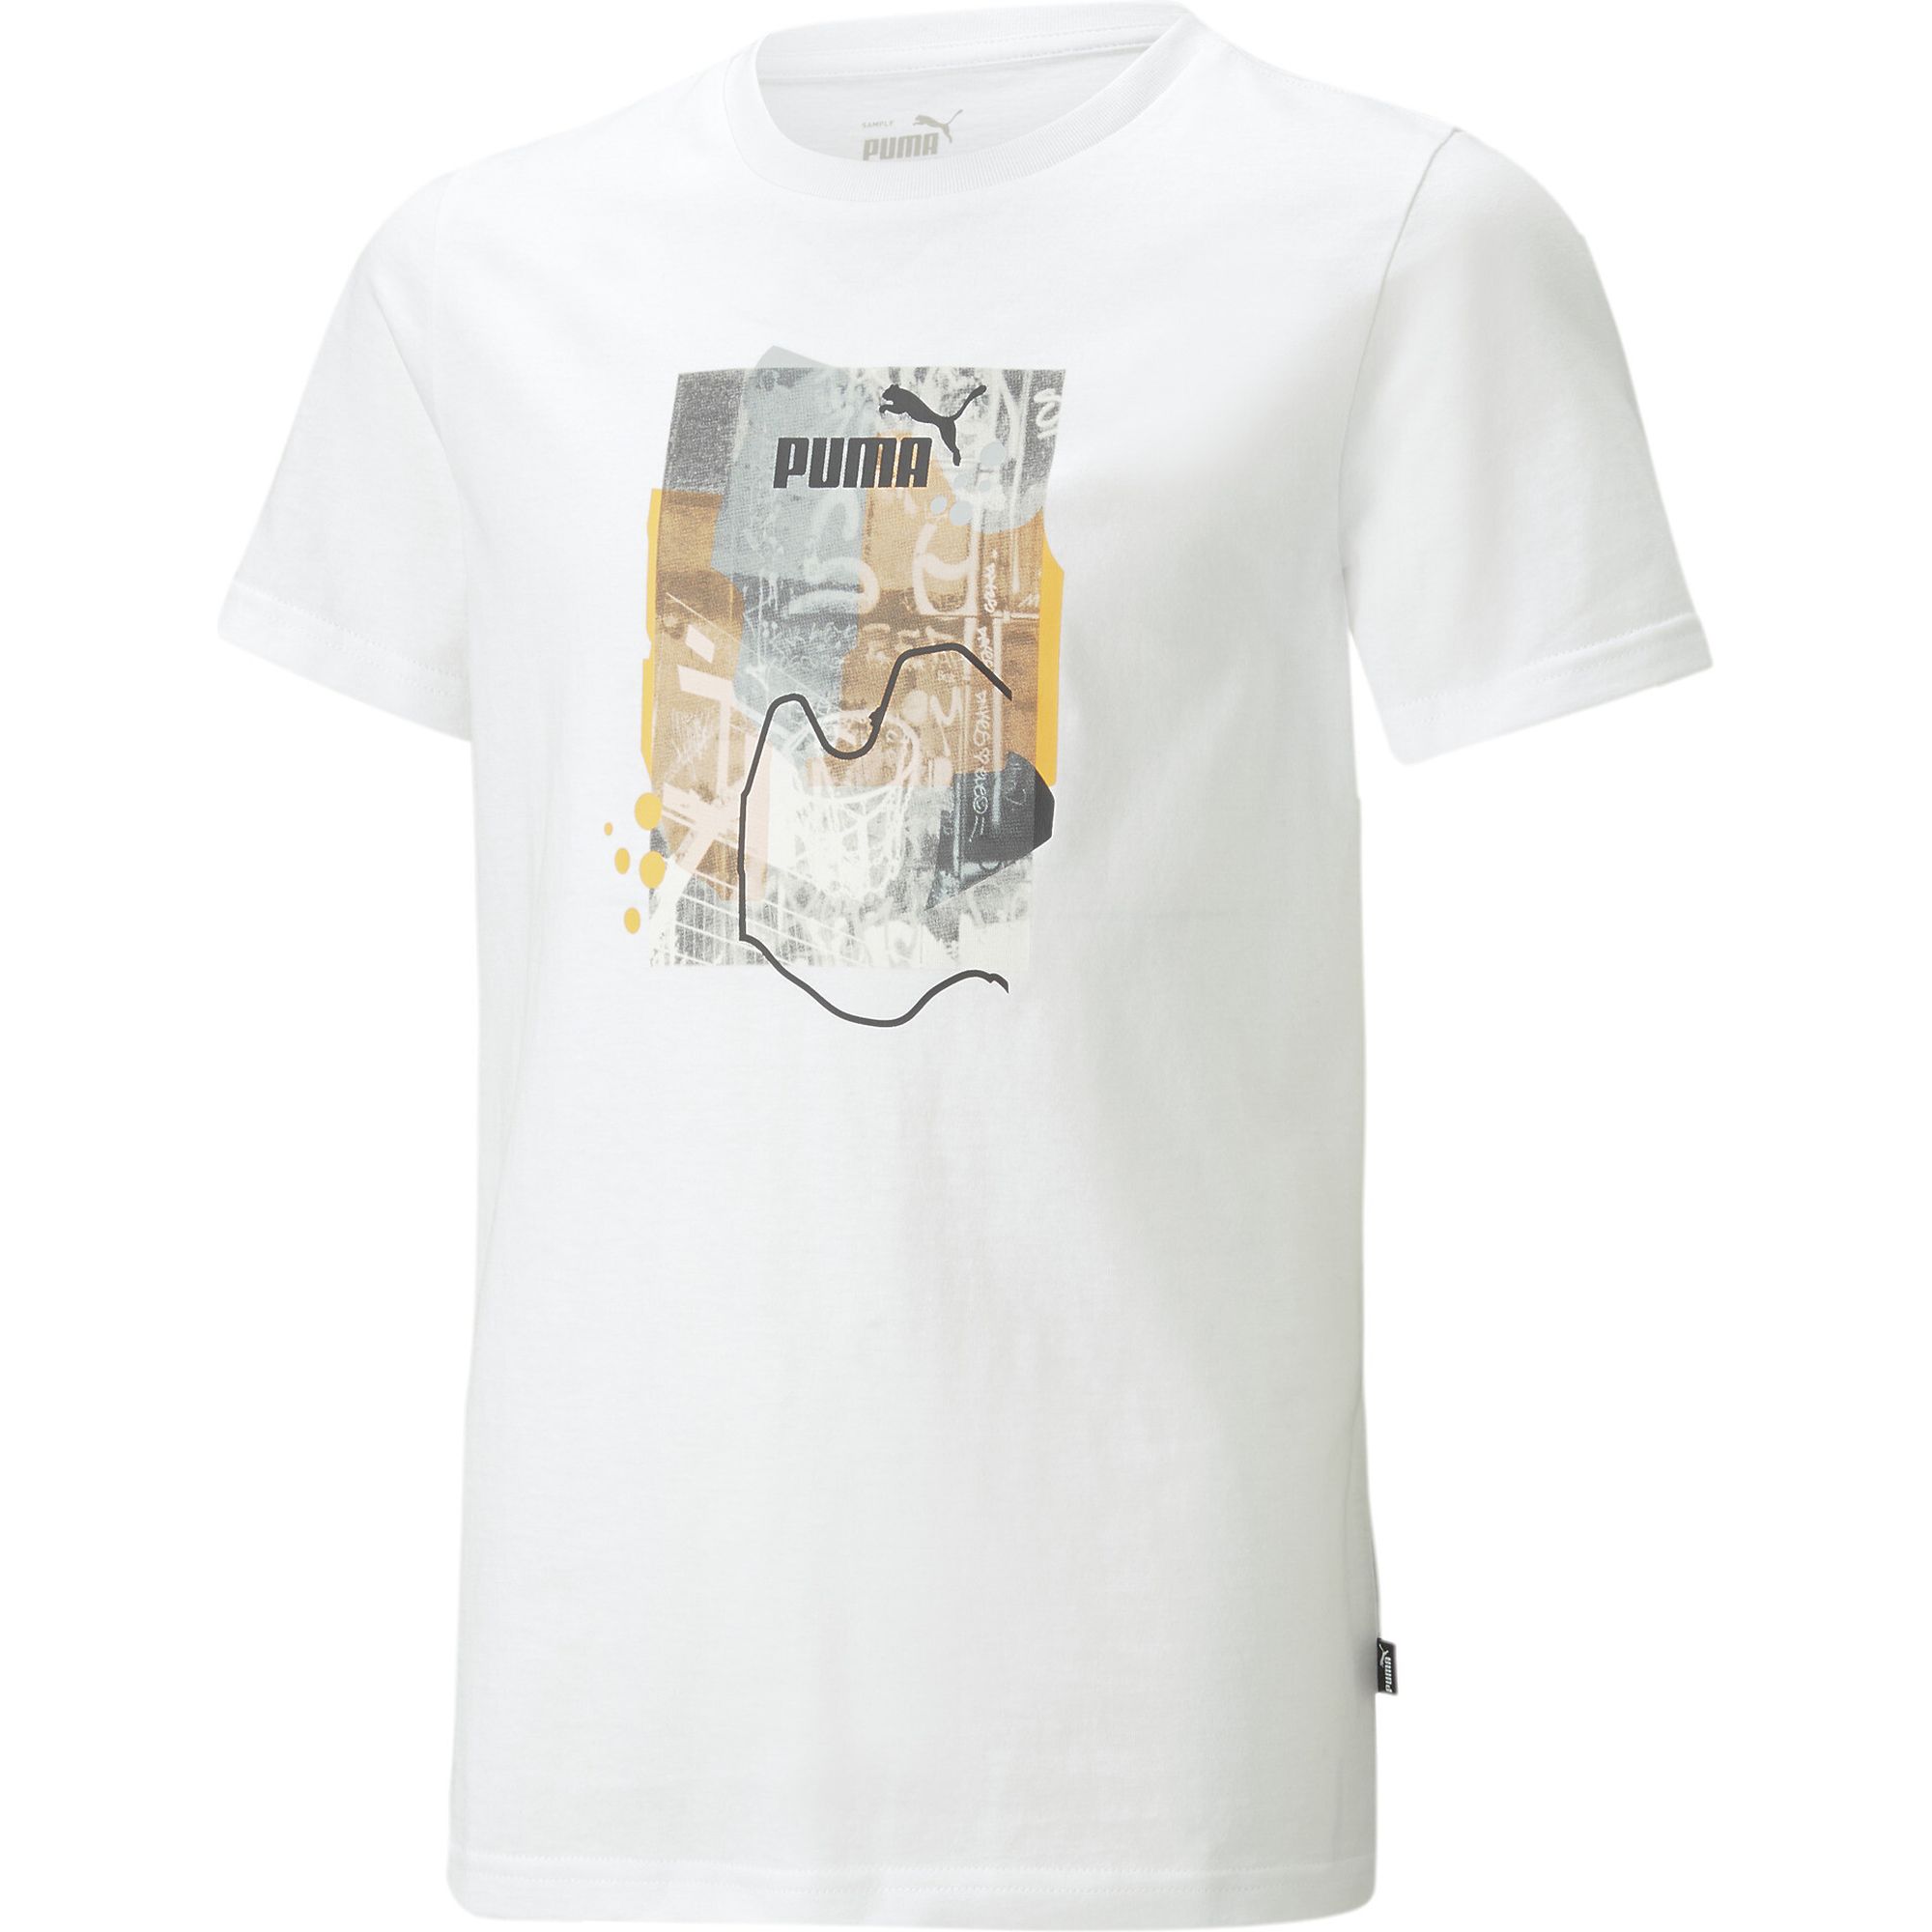 Puma Ess+ Street Art Graphic Tee B Shirts white jetzt bei Berger kaufen